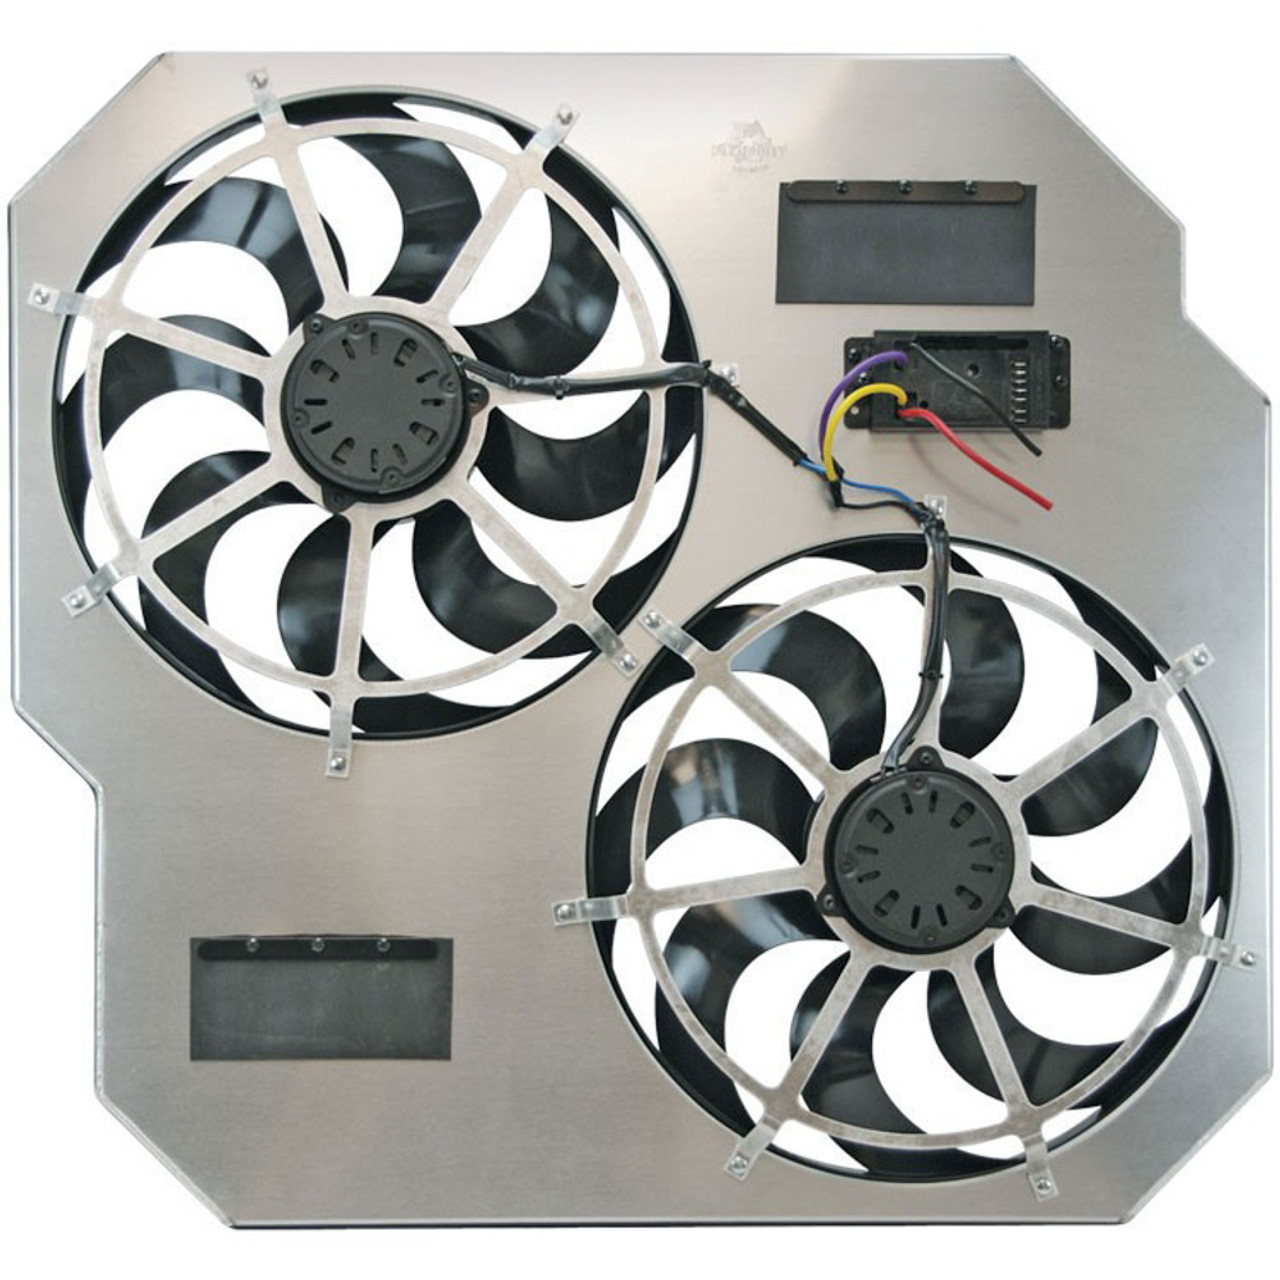 Flex-A-Lite Fan Electric 15in DualSh rouded Puller Controls - FLE104641